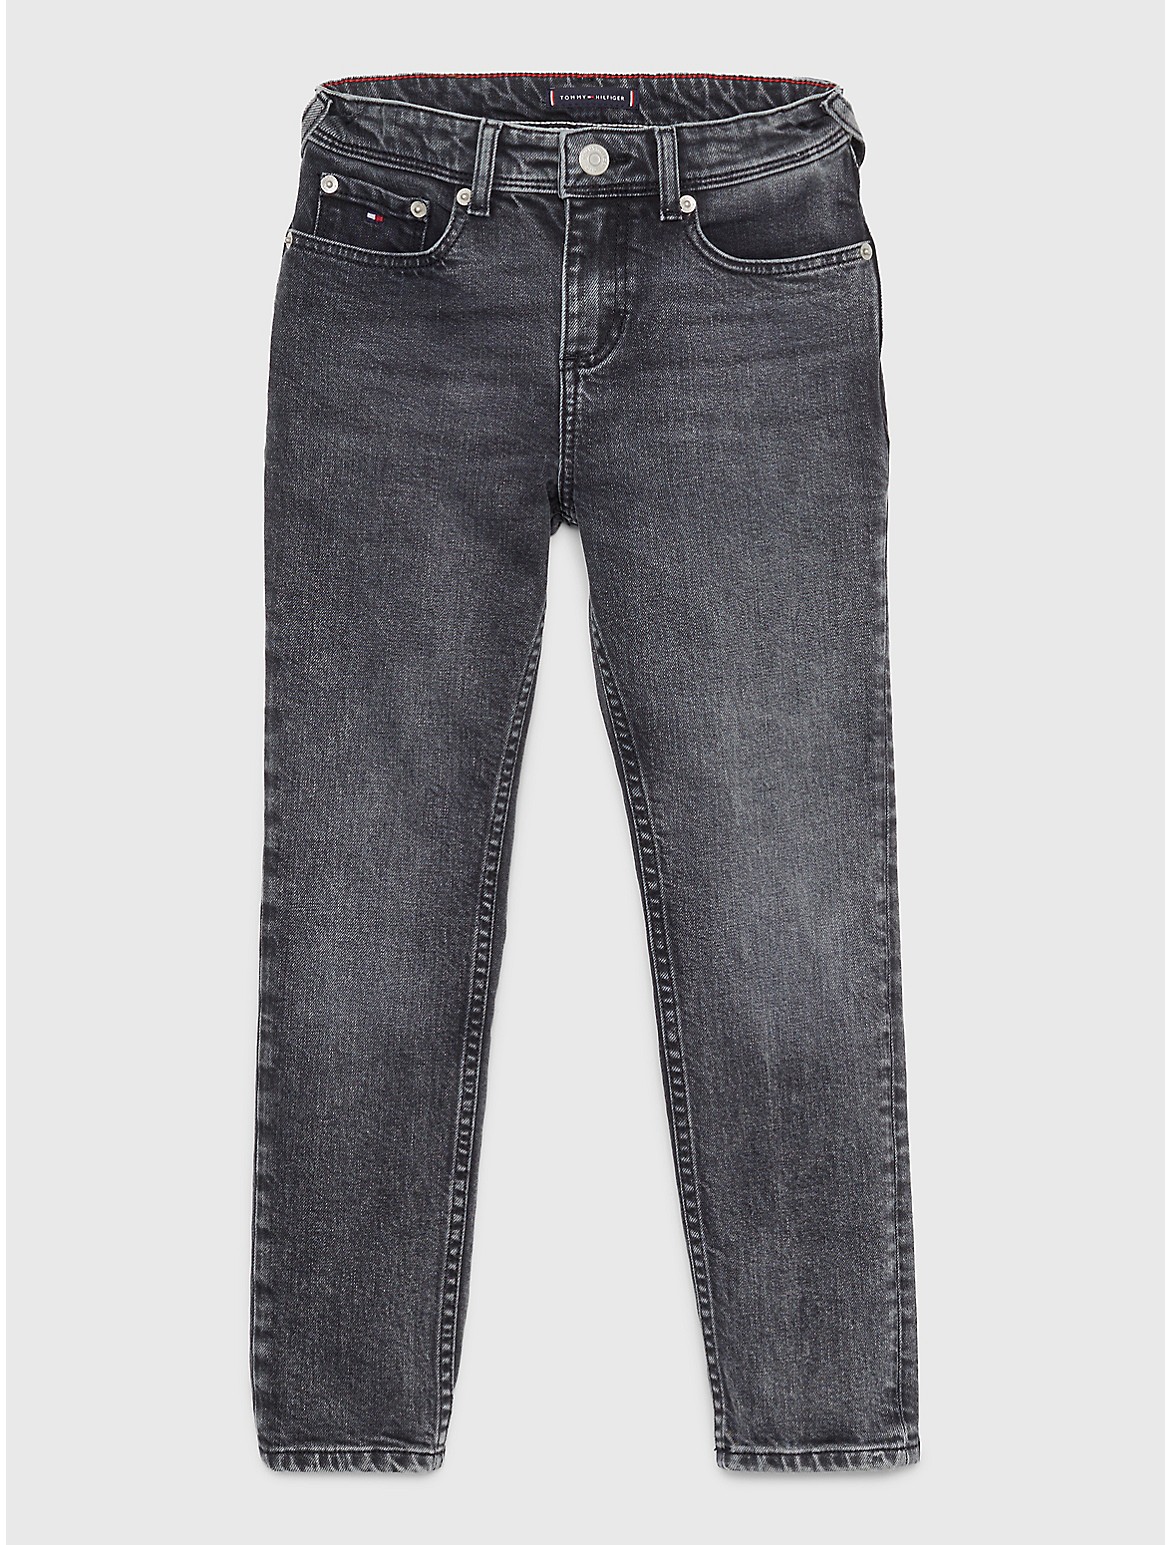 Tommy Hilfiger Boys' Kids' Slim Fit Faded Black Wash Jean